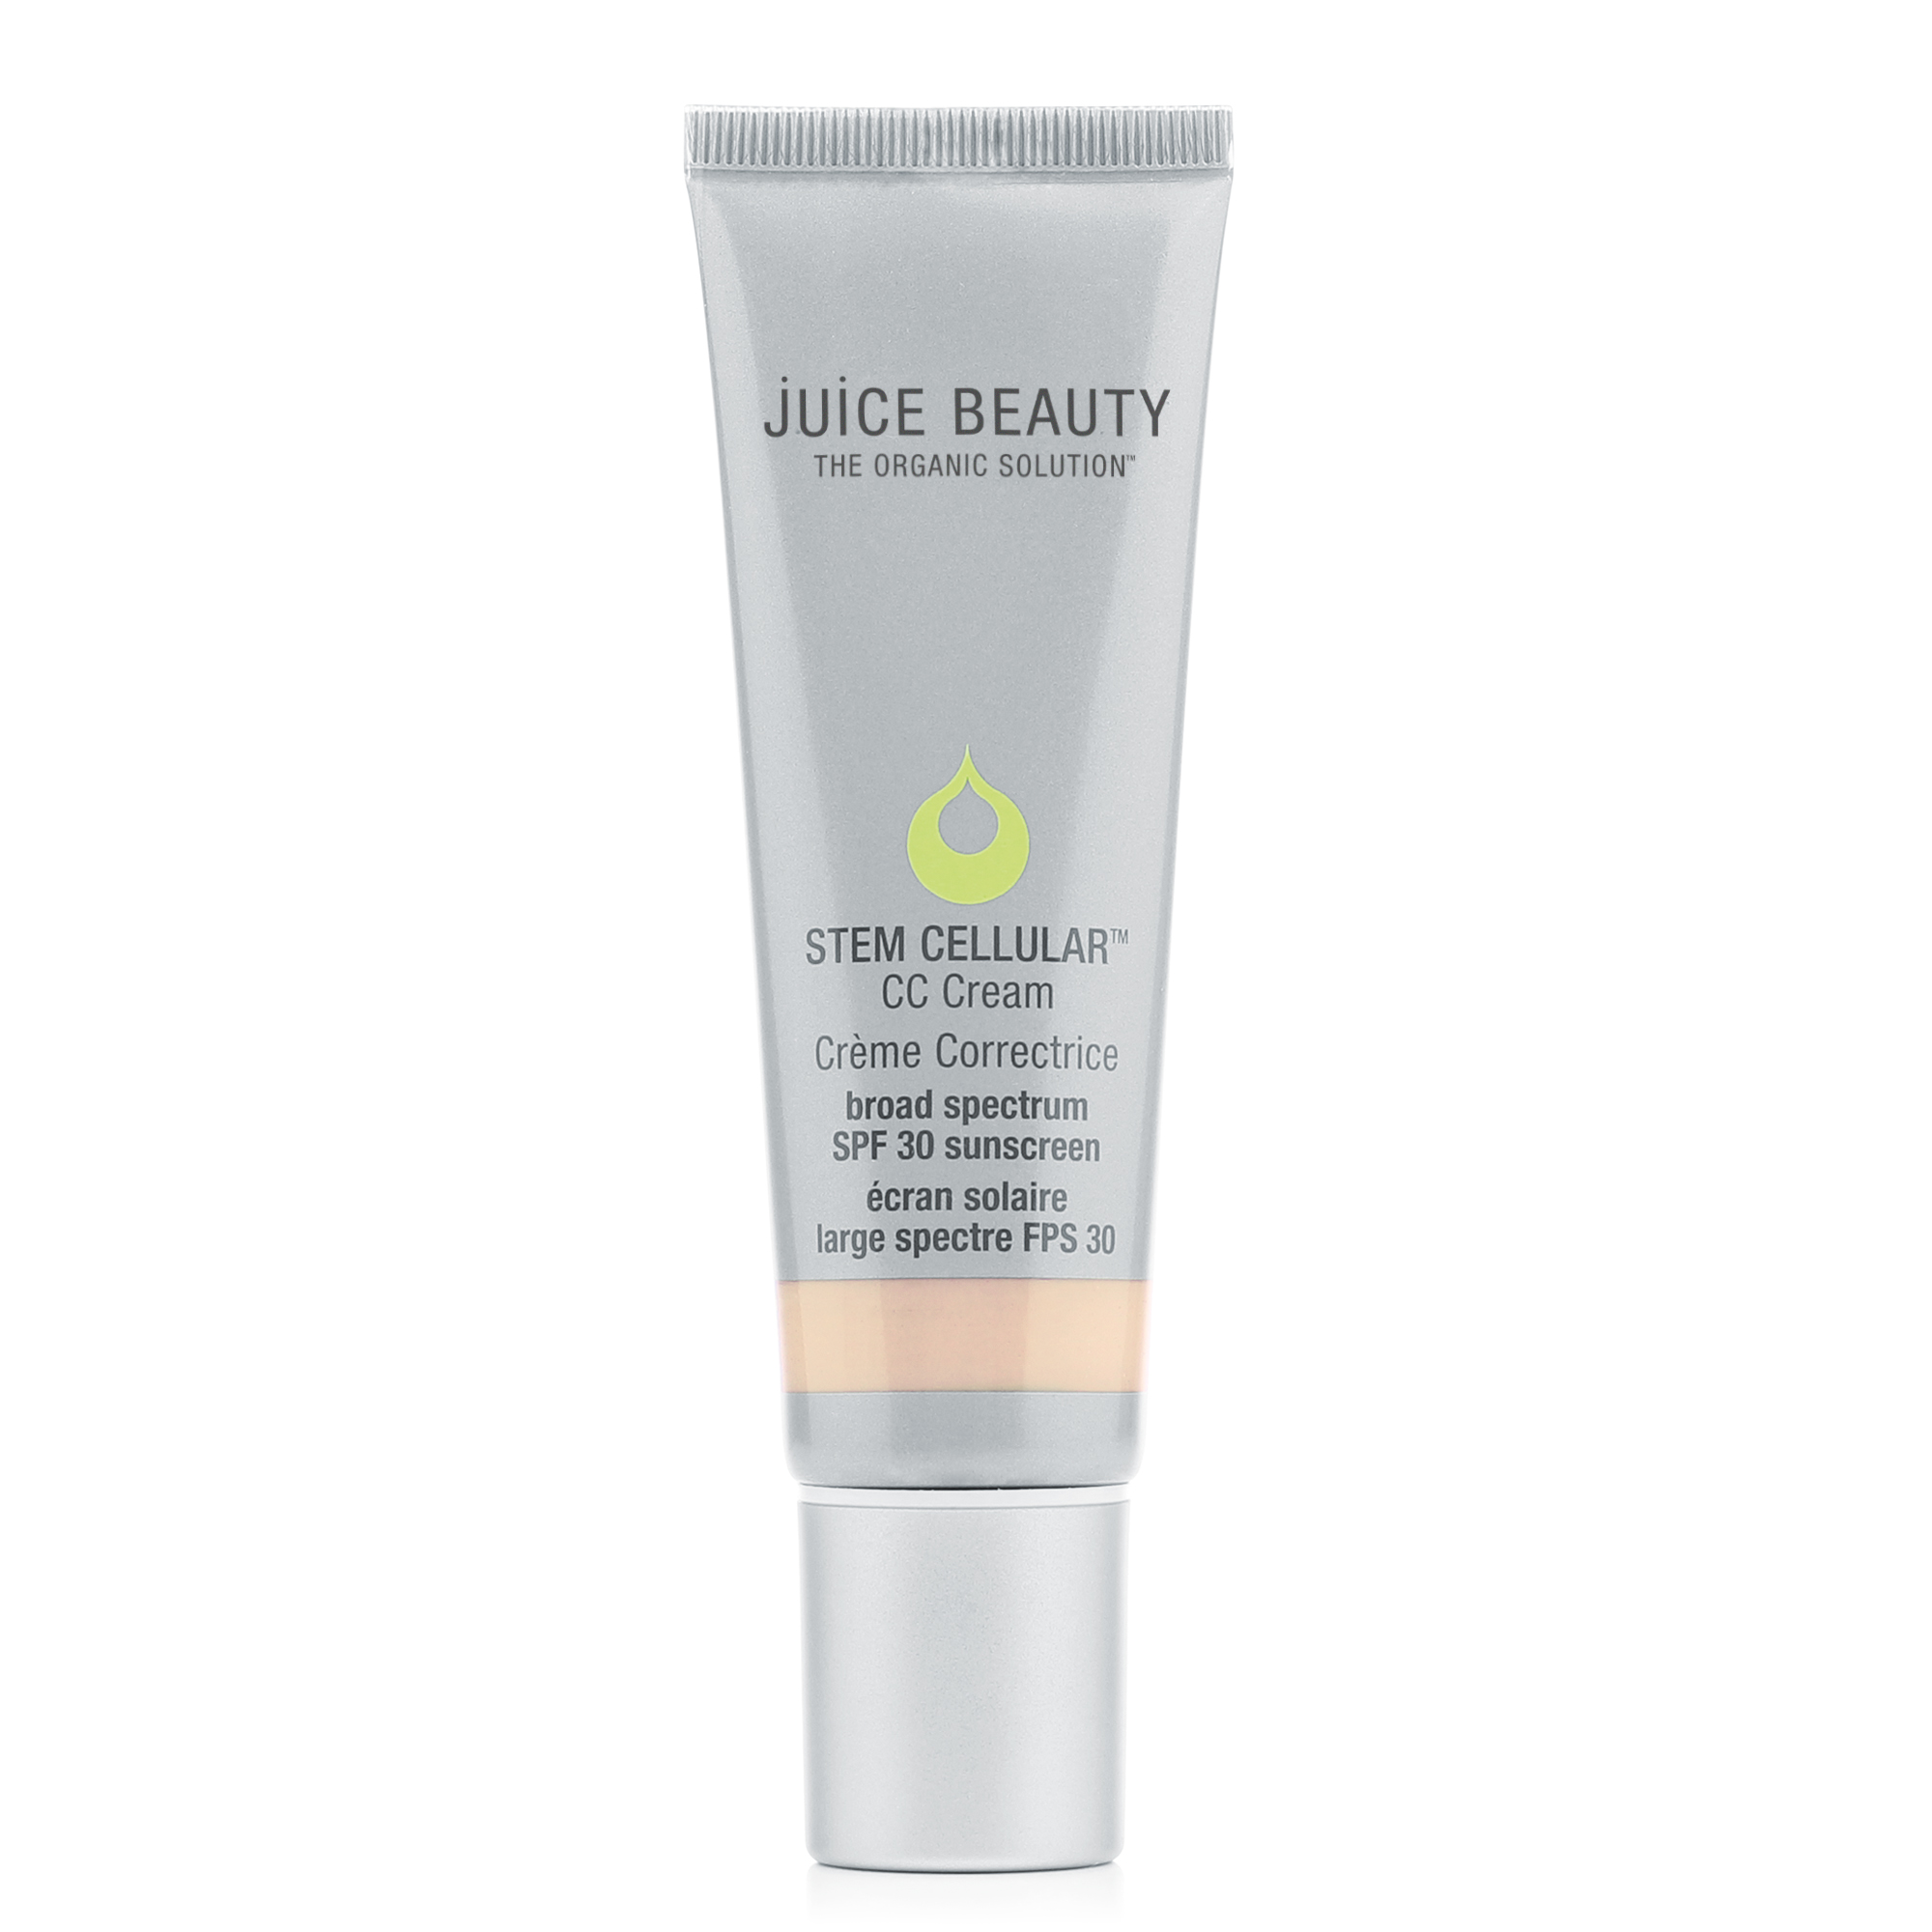 Juice Beauty Stem Cellular CC Cream, Anti Aging, Rosy Glow, SPF 30, 1.7 oz - image 1 of 5